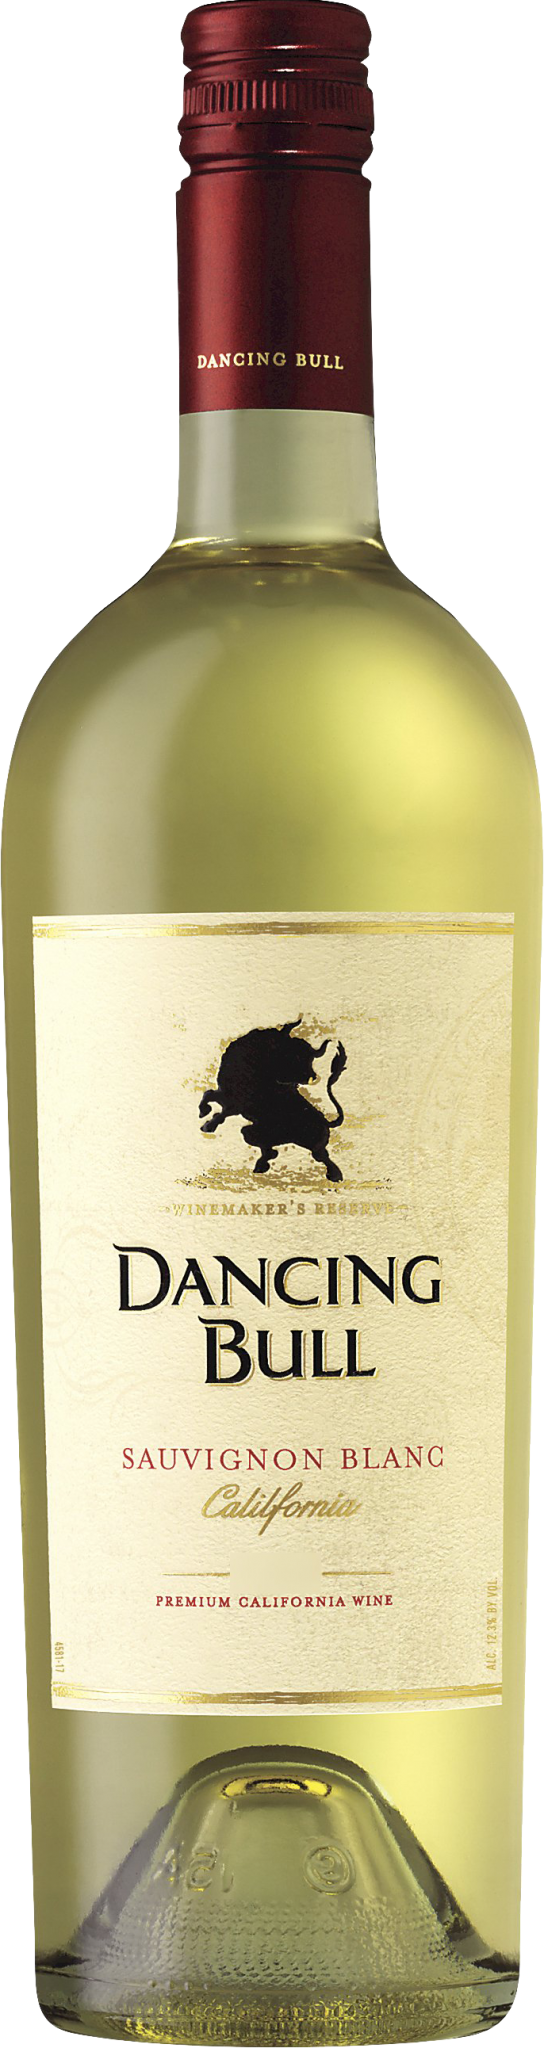 images/wine/WHITE WINE/Dancing Bull Sauvignon Blanc.png